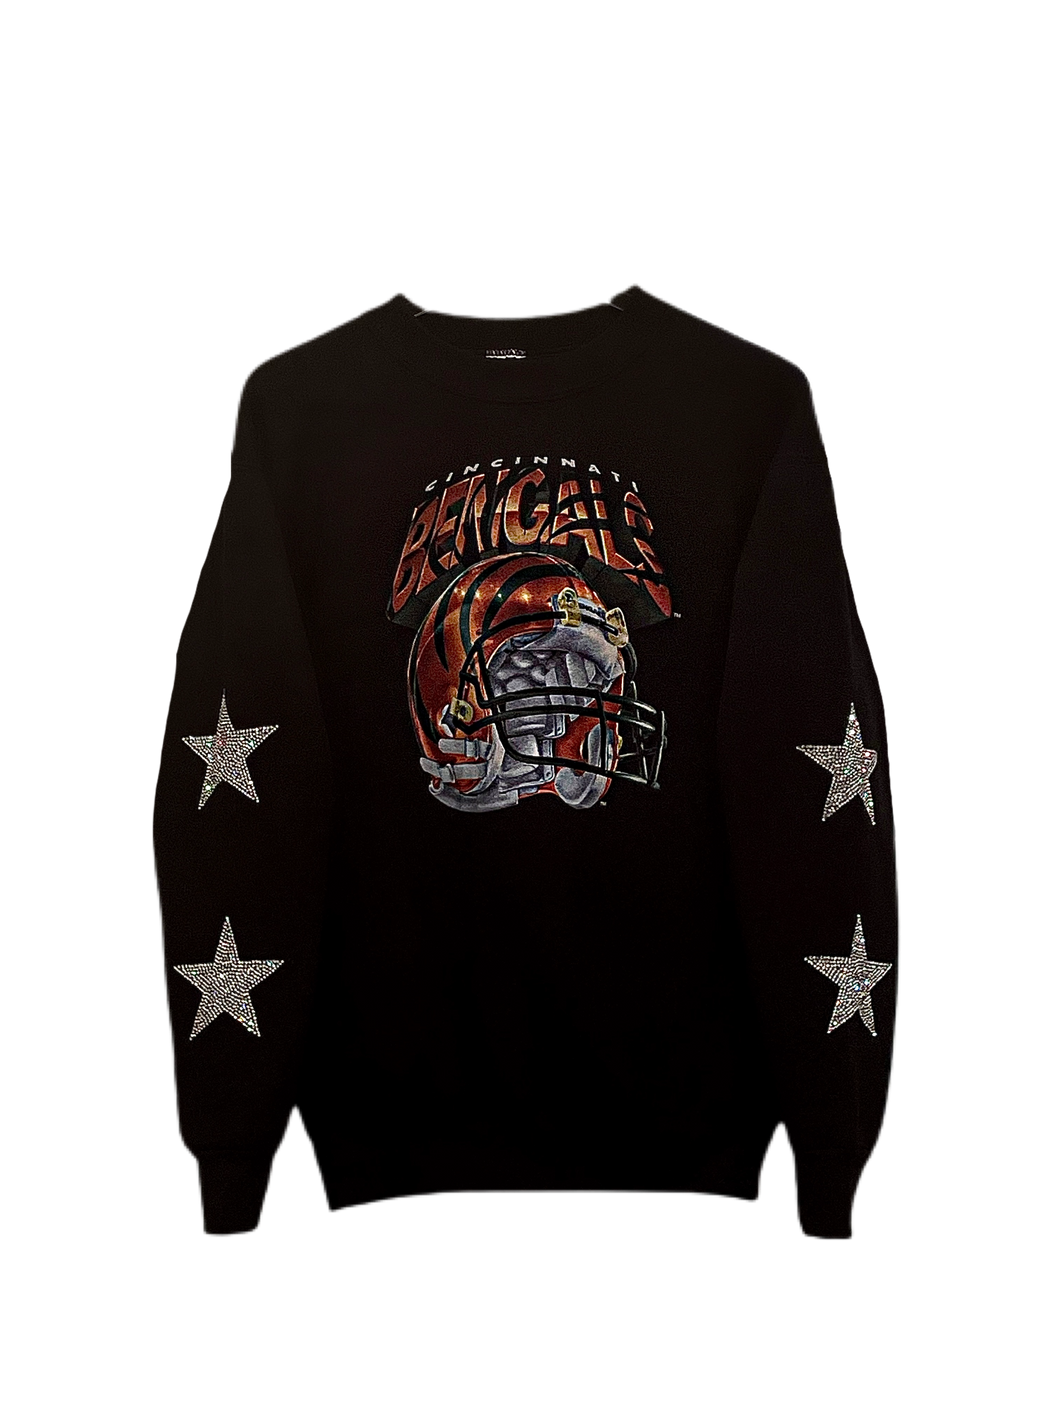 Cincinnati Bengals, NFL One of a KIND Sweatshirt with Crystal Star Design